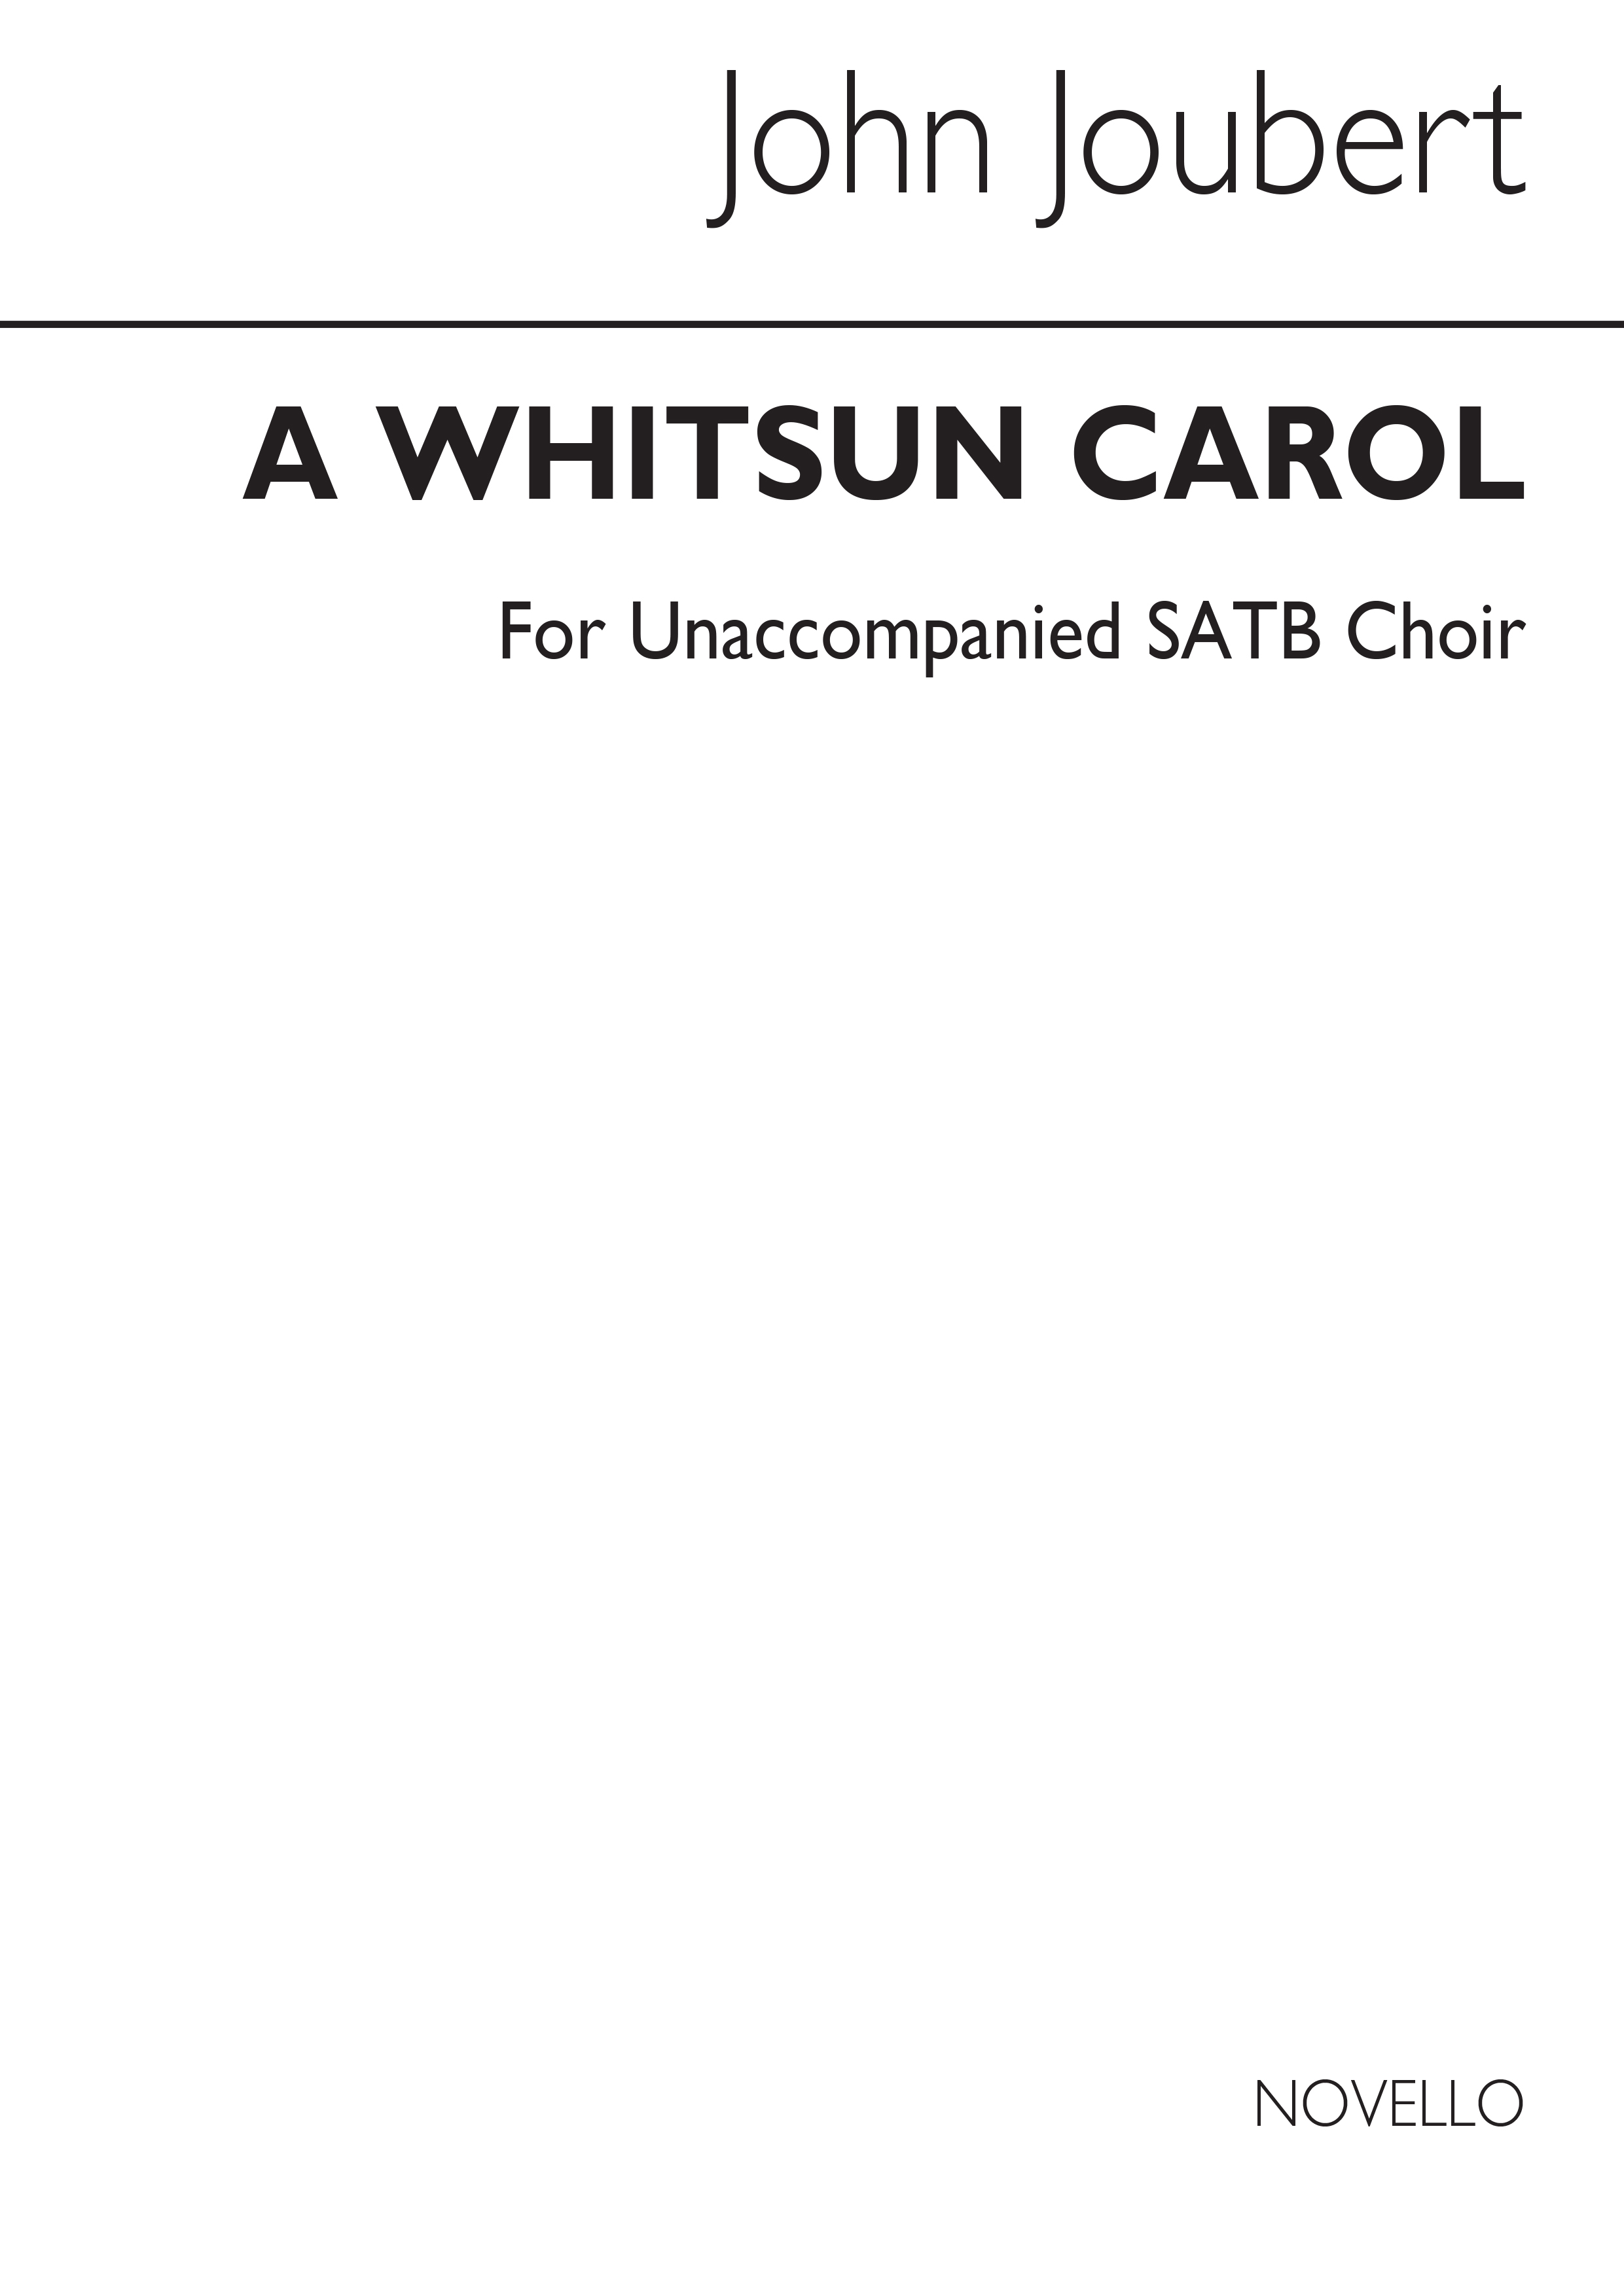 Joubert: A Whitsun Carol for SATB Chorus Op. 115b